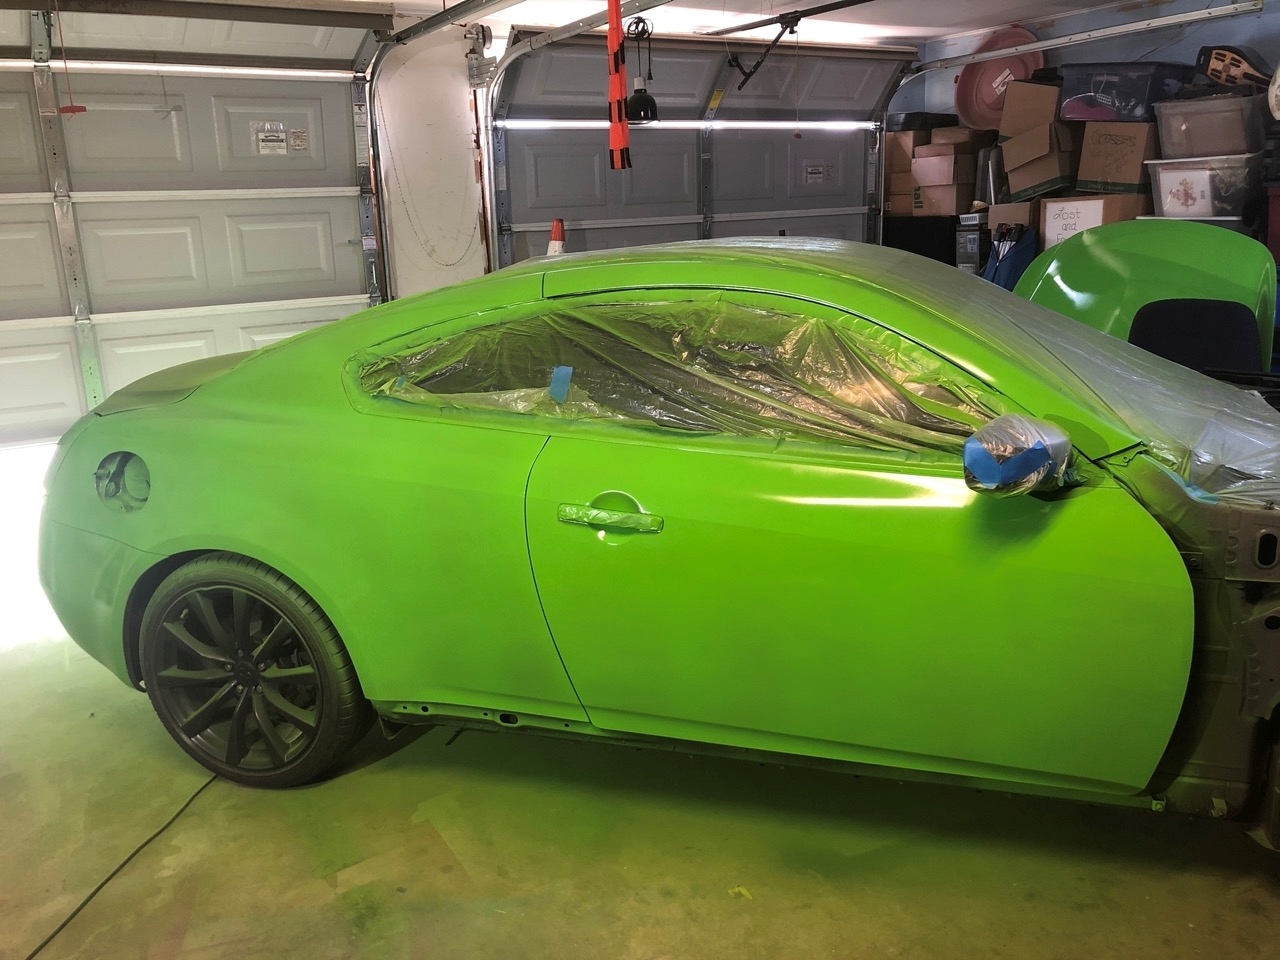 Additional coats of paint for a custom car paint job